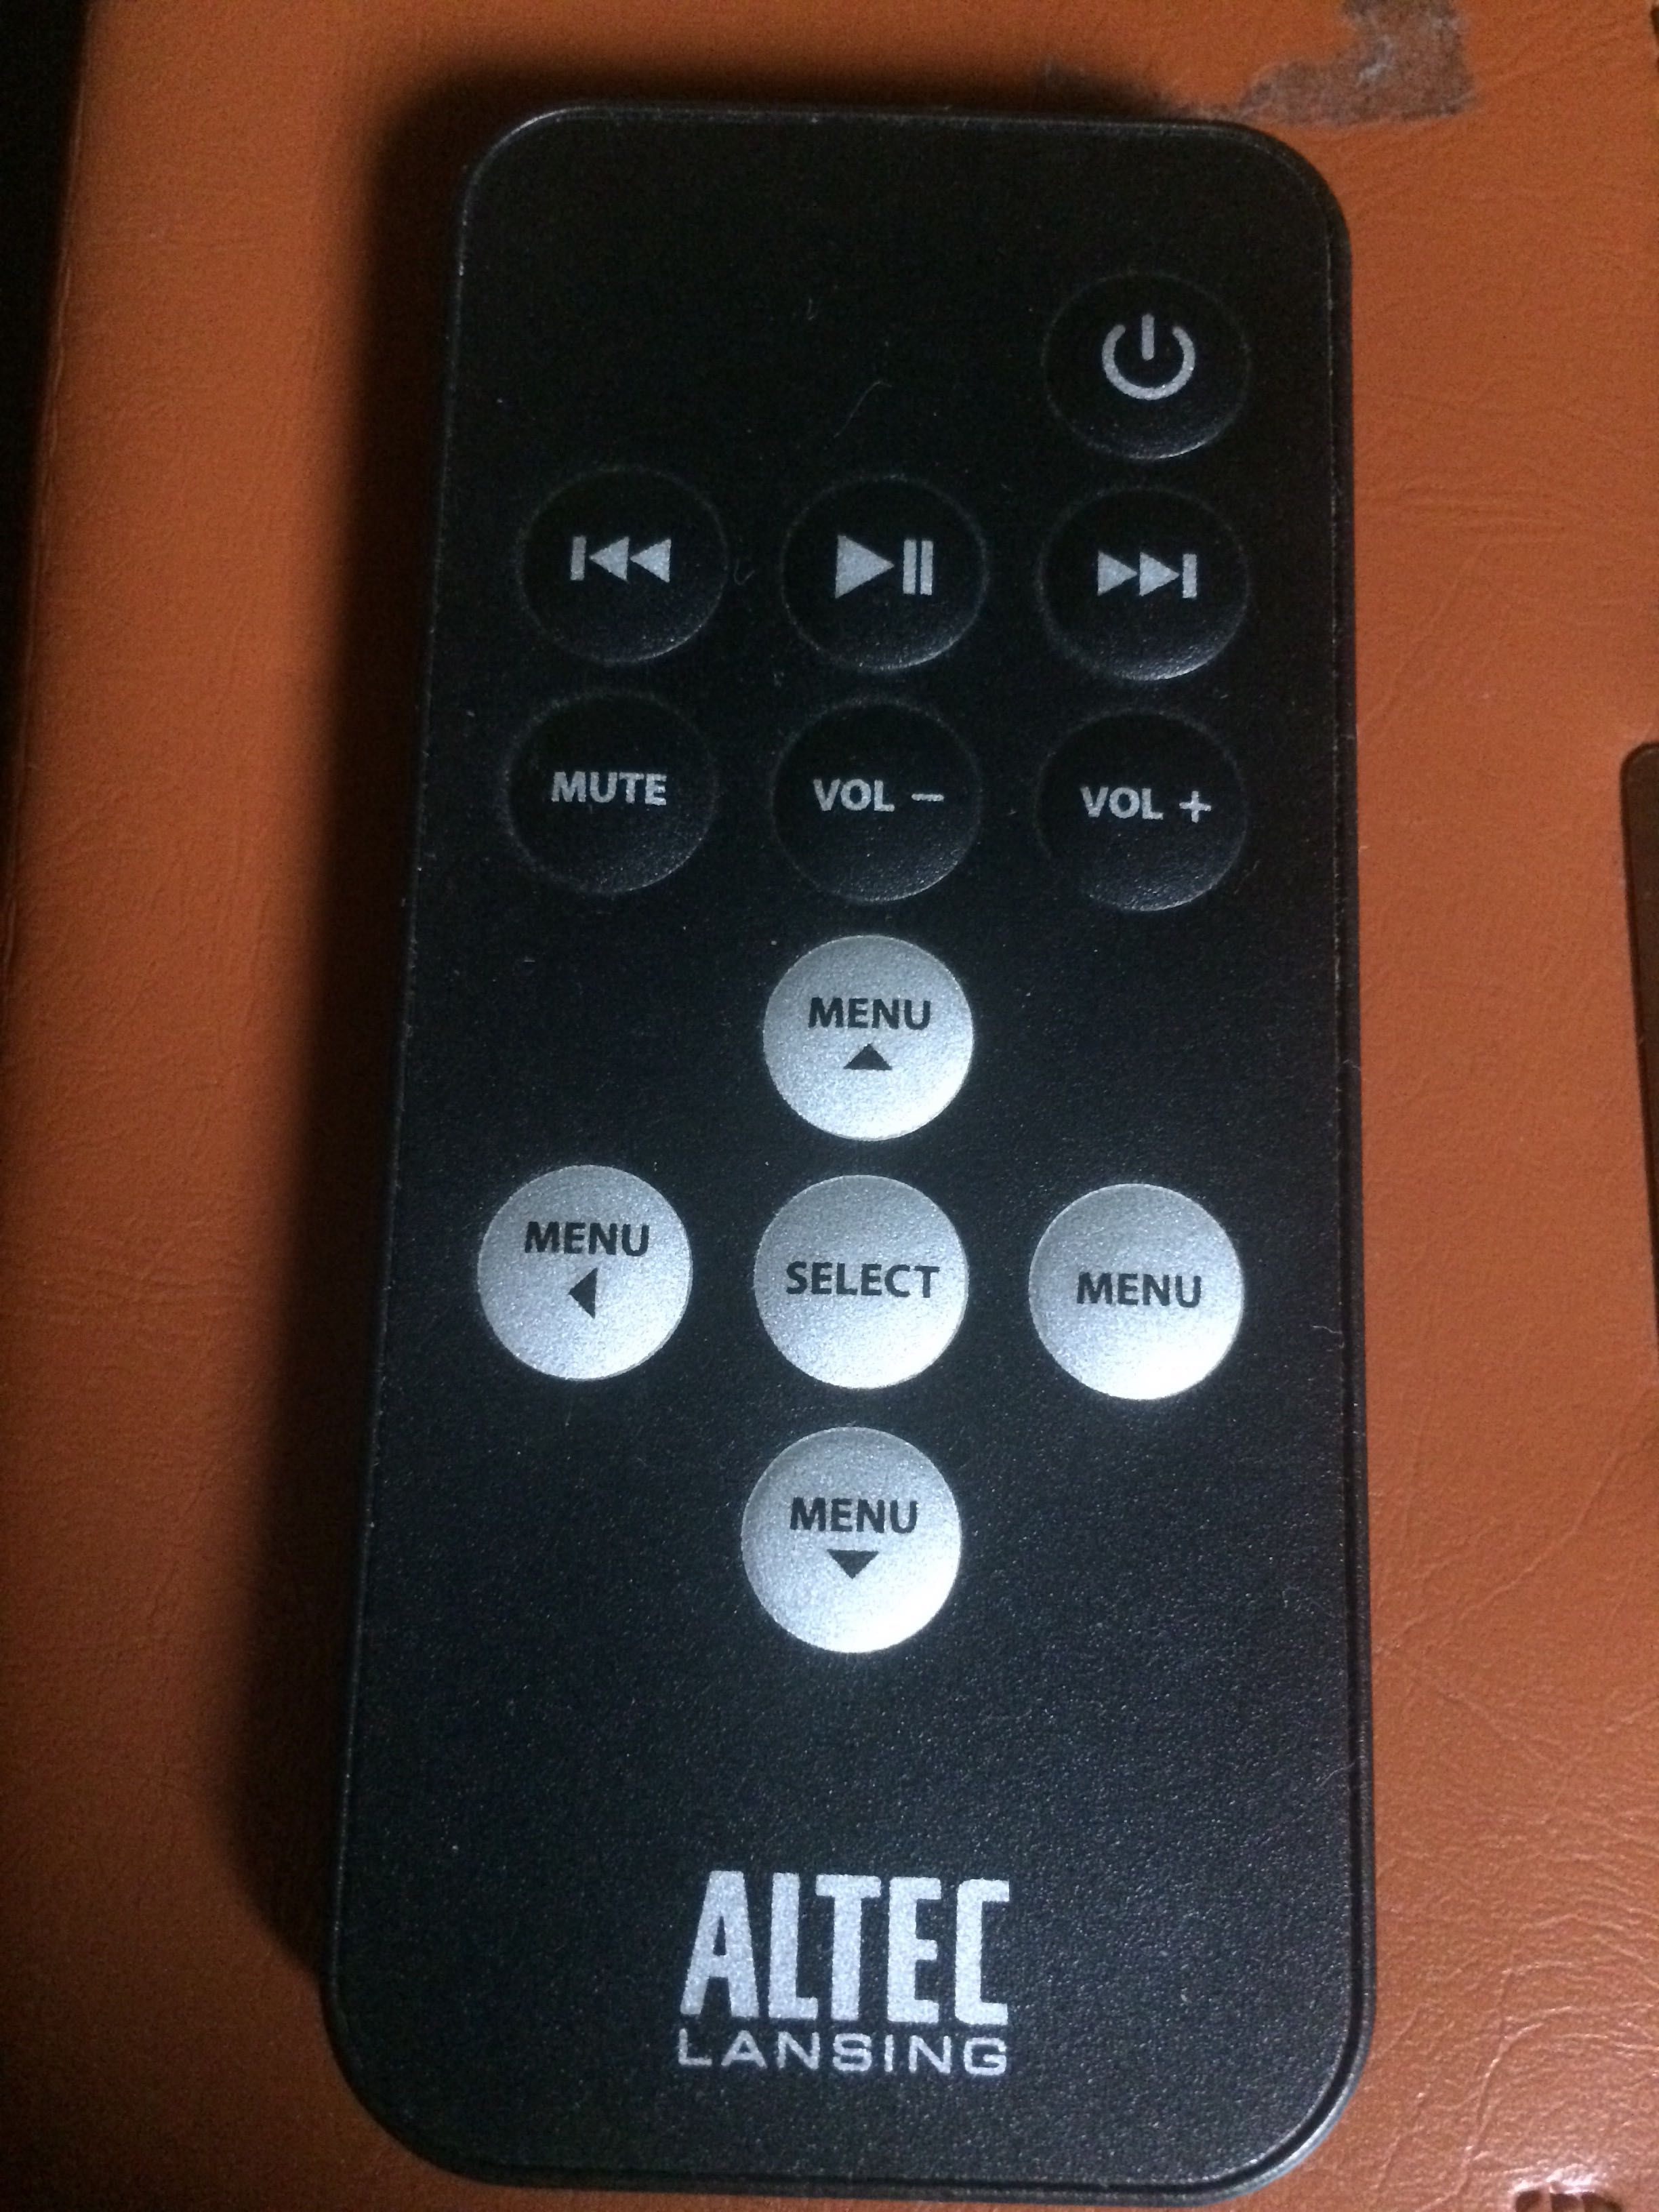 Altec Lansing remote control